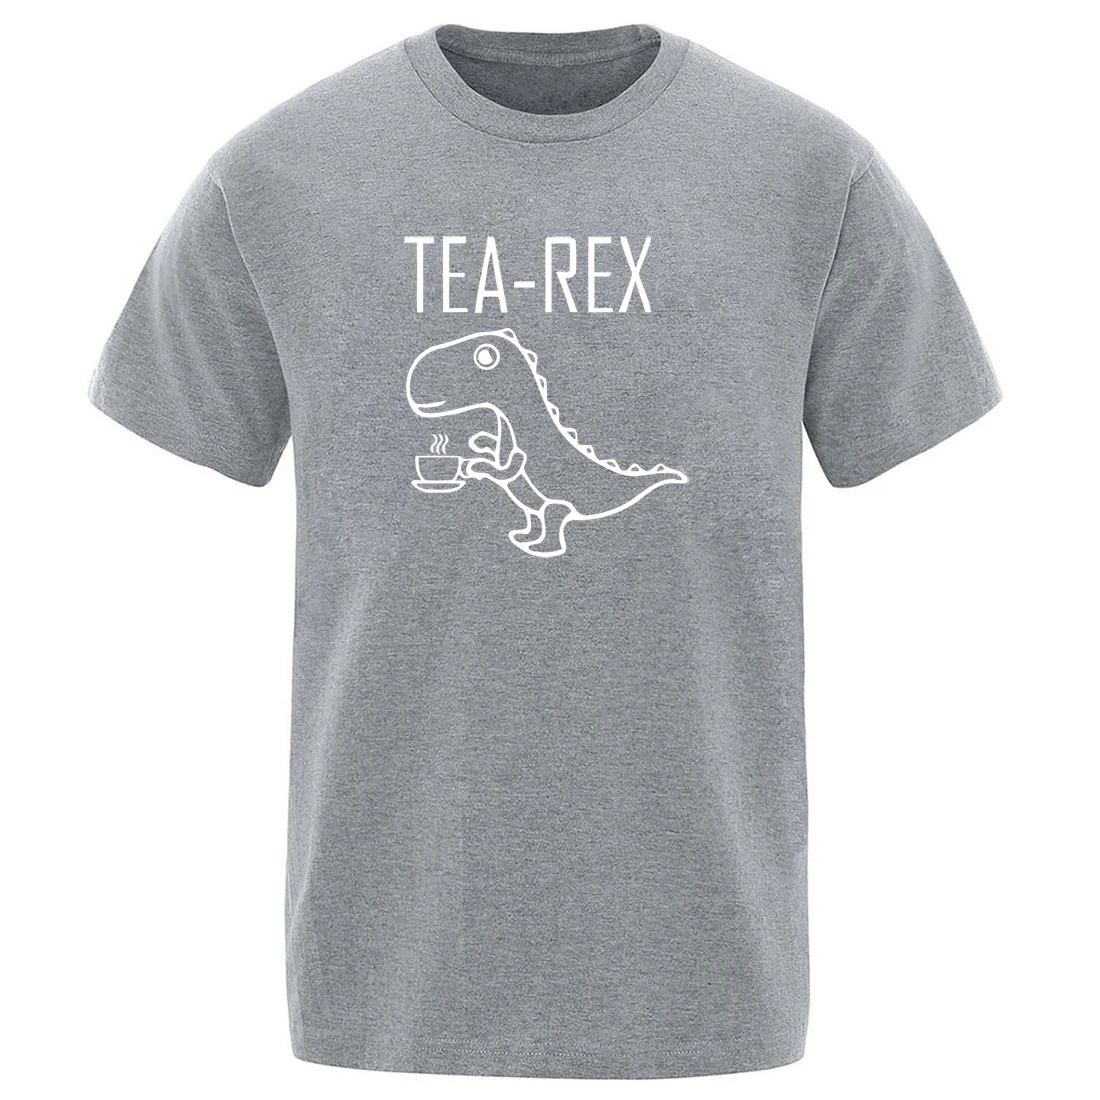 Hot Sale Tea Rex Print Men's t-shirts Funny Harajuku crew neck solid color tshirts 2020 hip hop 100% cotton Homme short sleeve